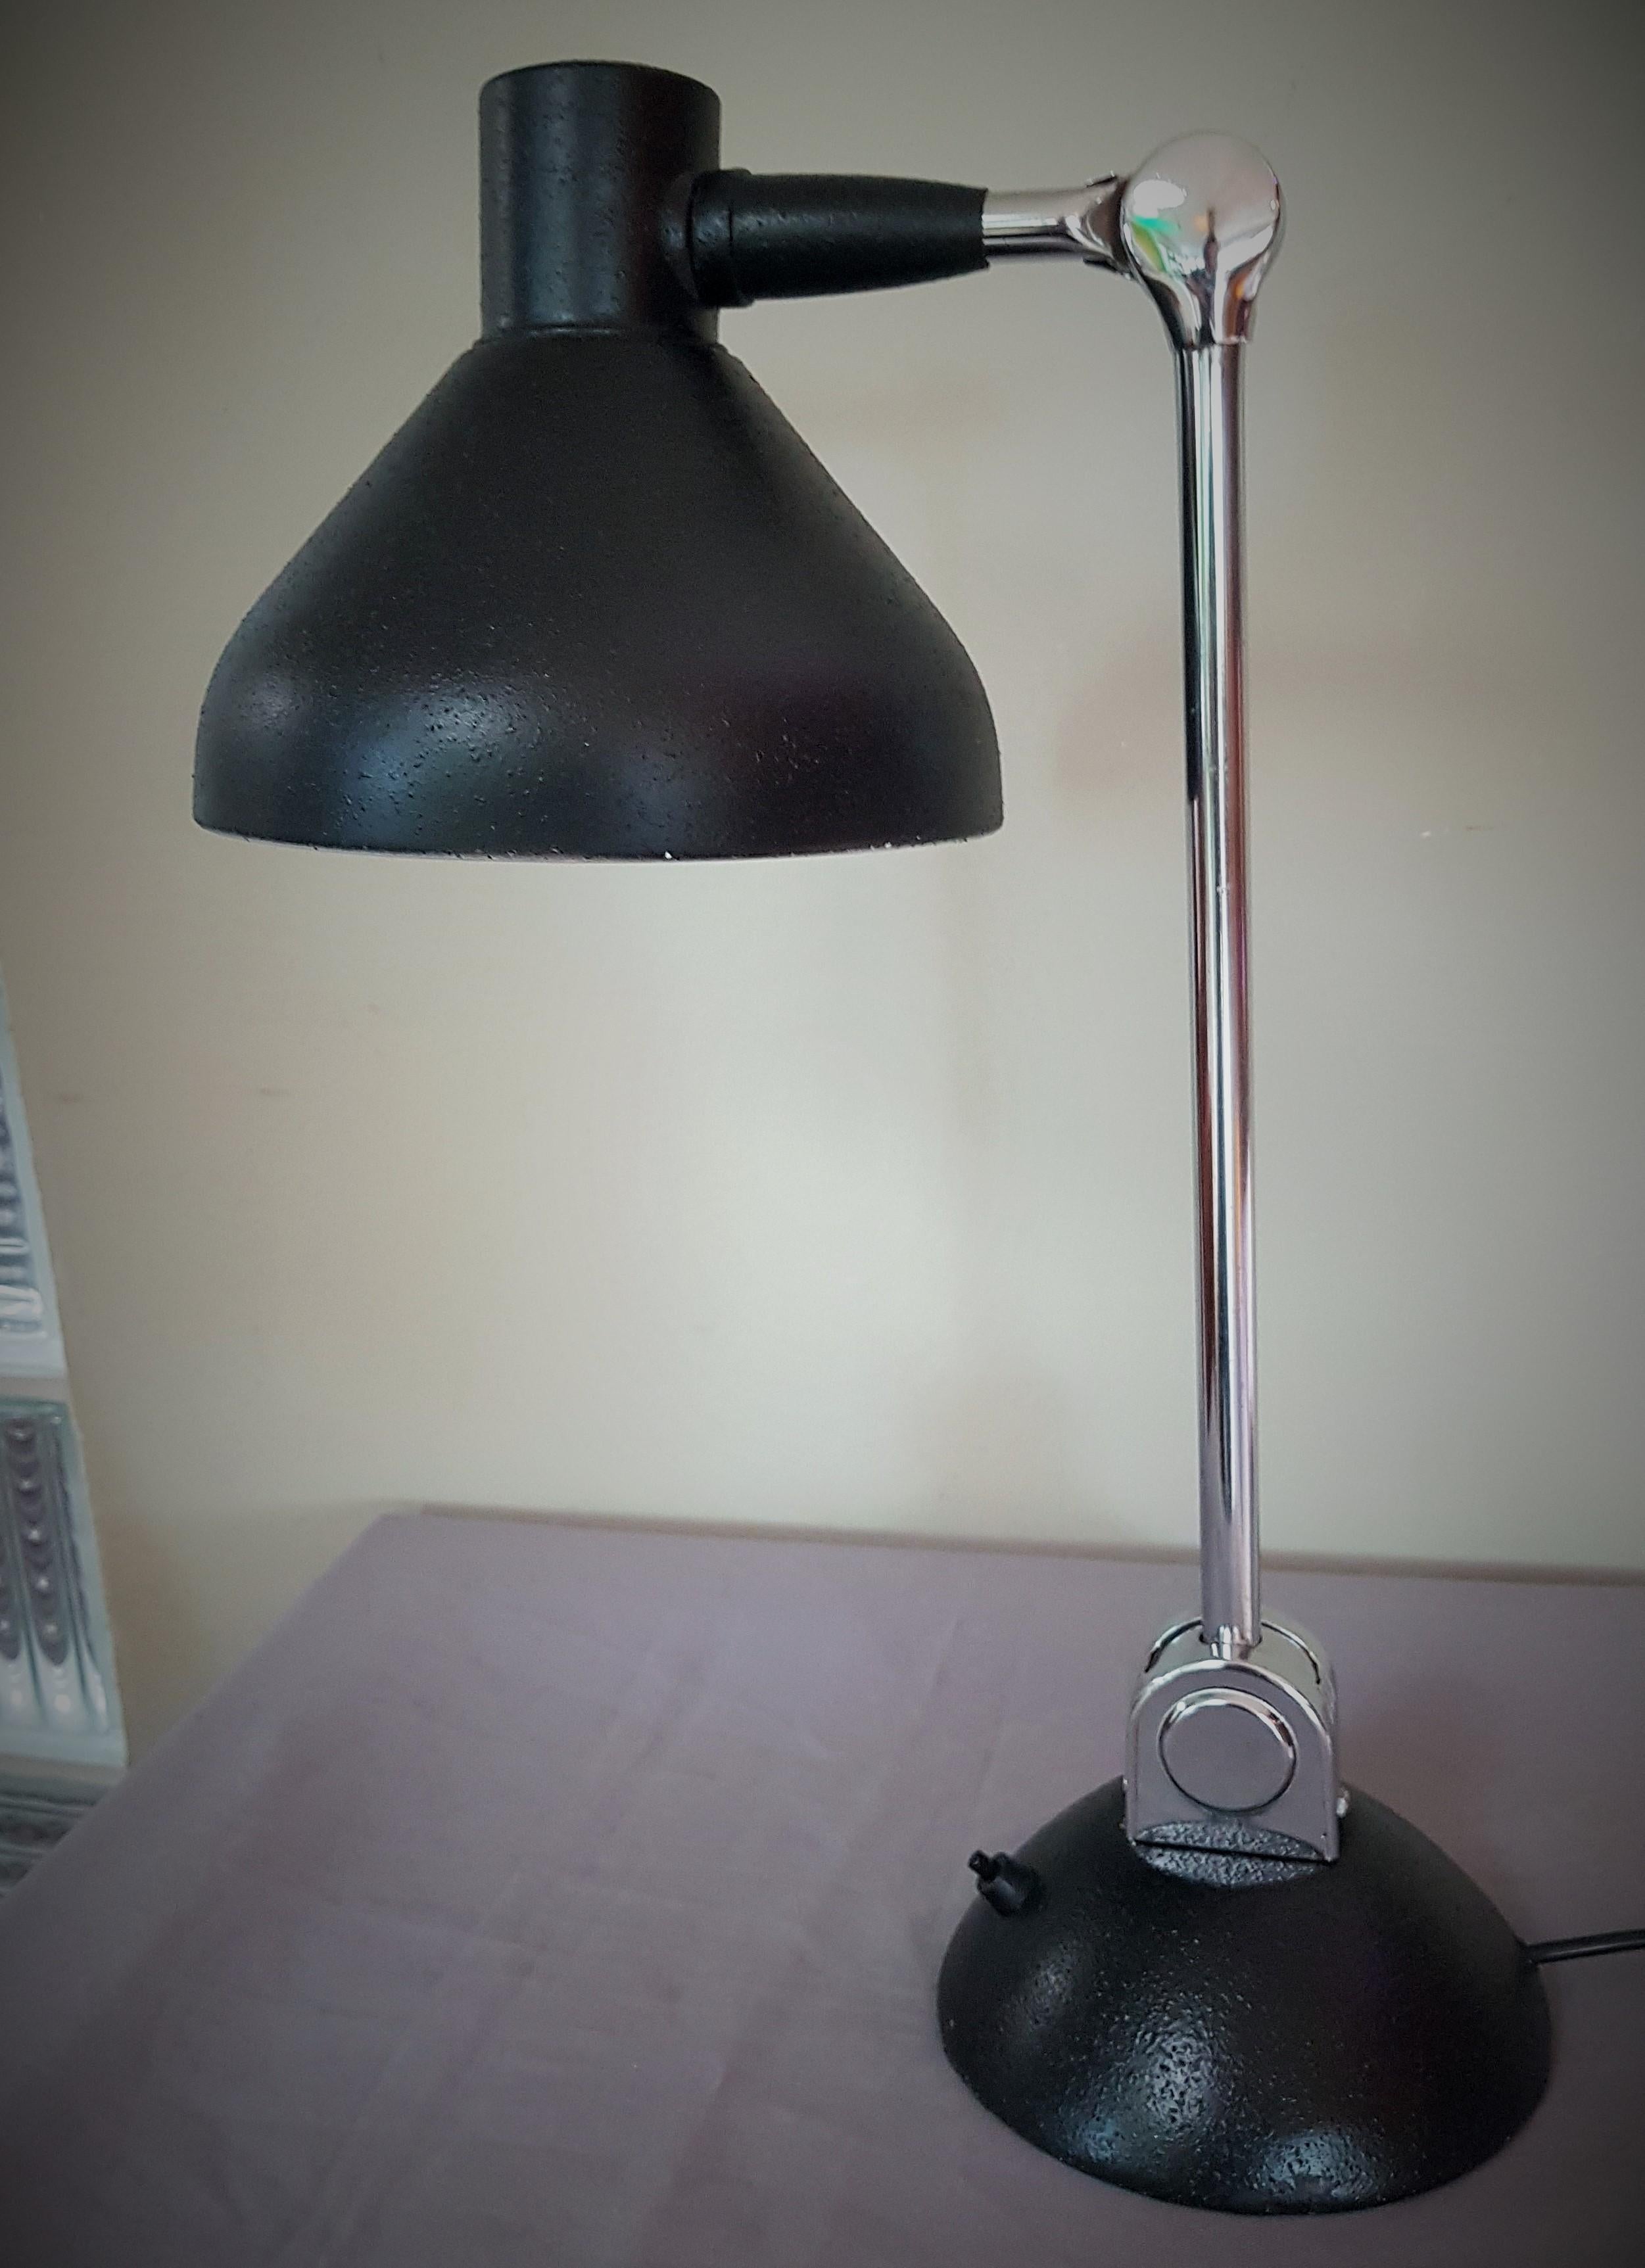 Art Deco Industrial Table Lamp by Jumo, France 1930s In Good Condition For Sale In Saarbruecken, DE